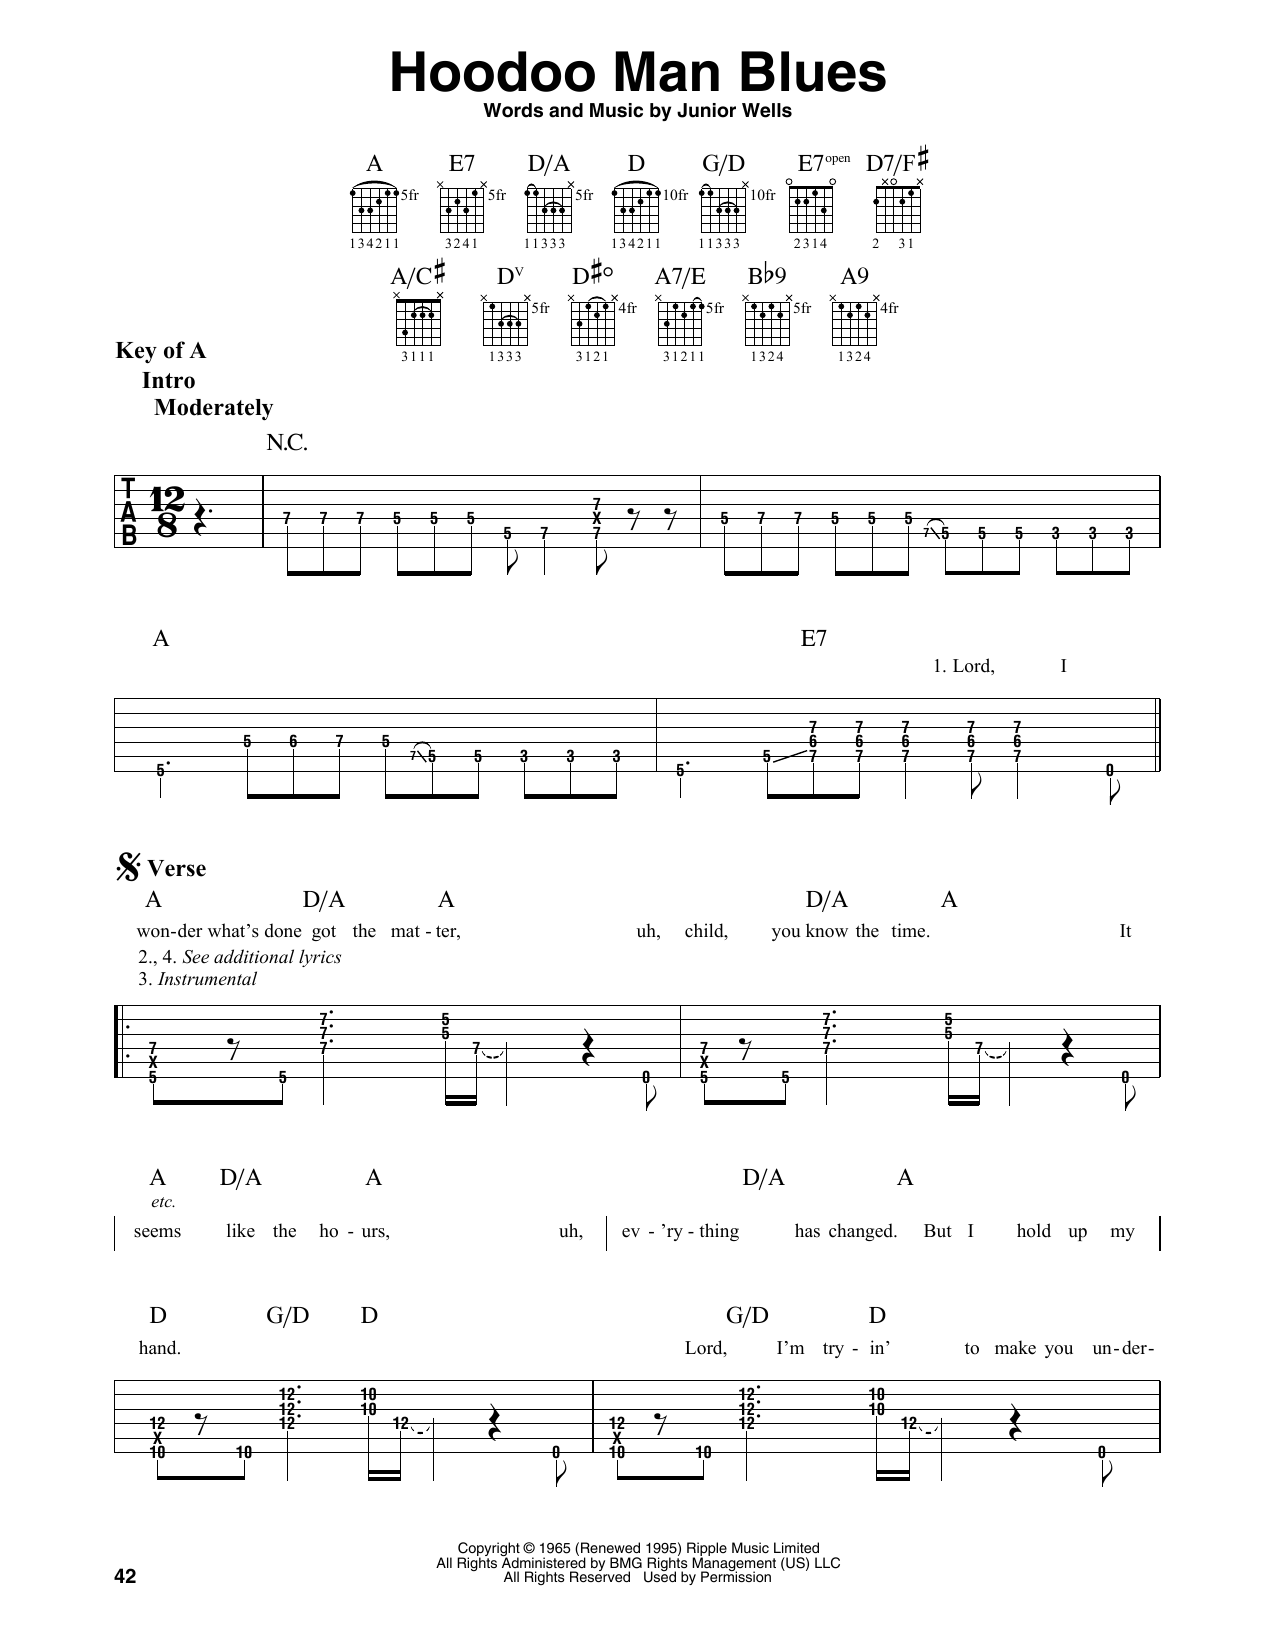 Junior Wells Hoodoo Man Blues Sheet Music Notes & Chords for Guitar Lead Sheet - Download or Print PDF